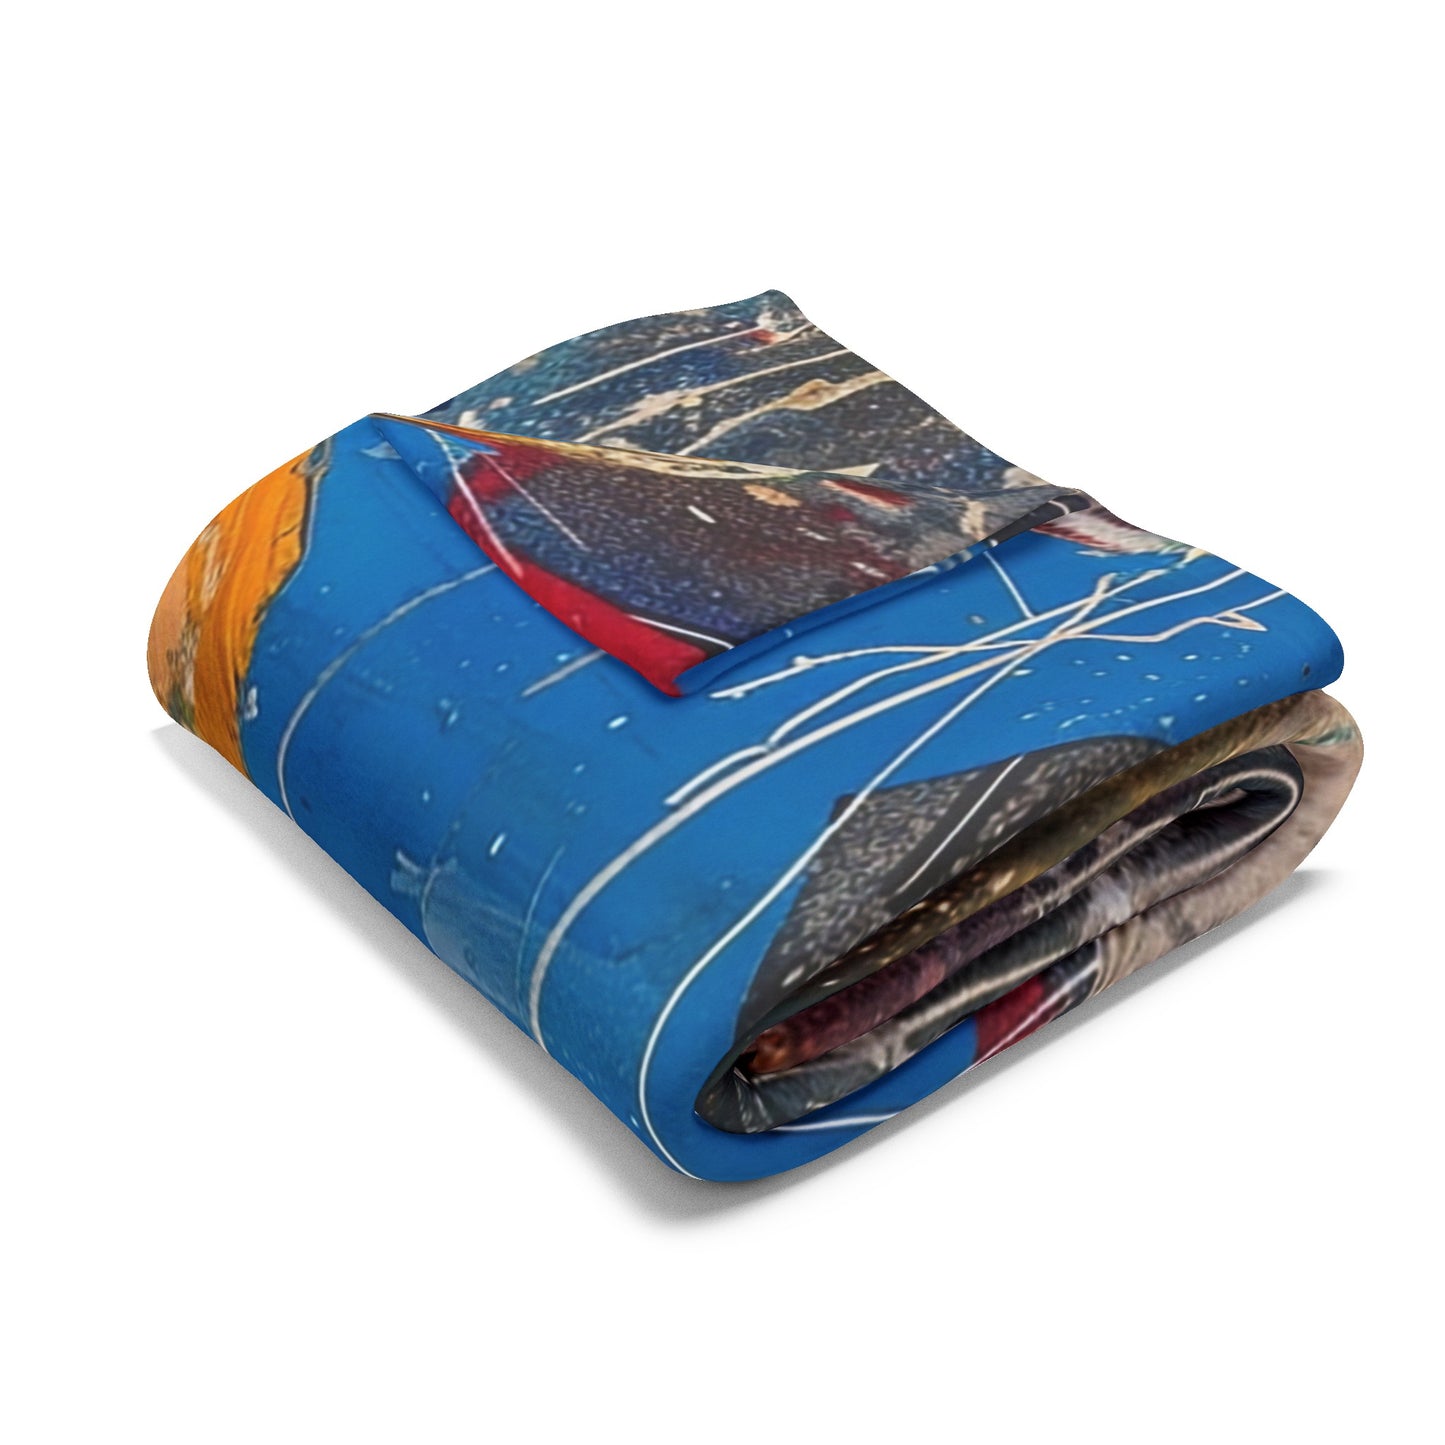 Arctic Fleece Blanket - Country Queen Western Style Blanket folded